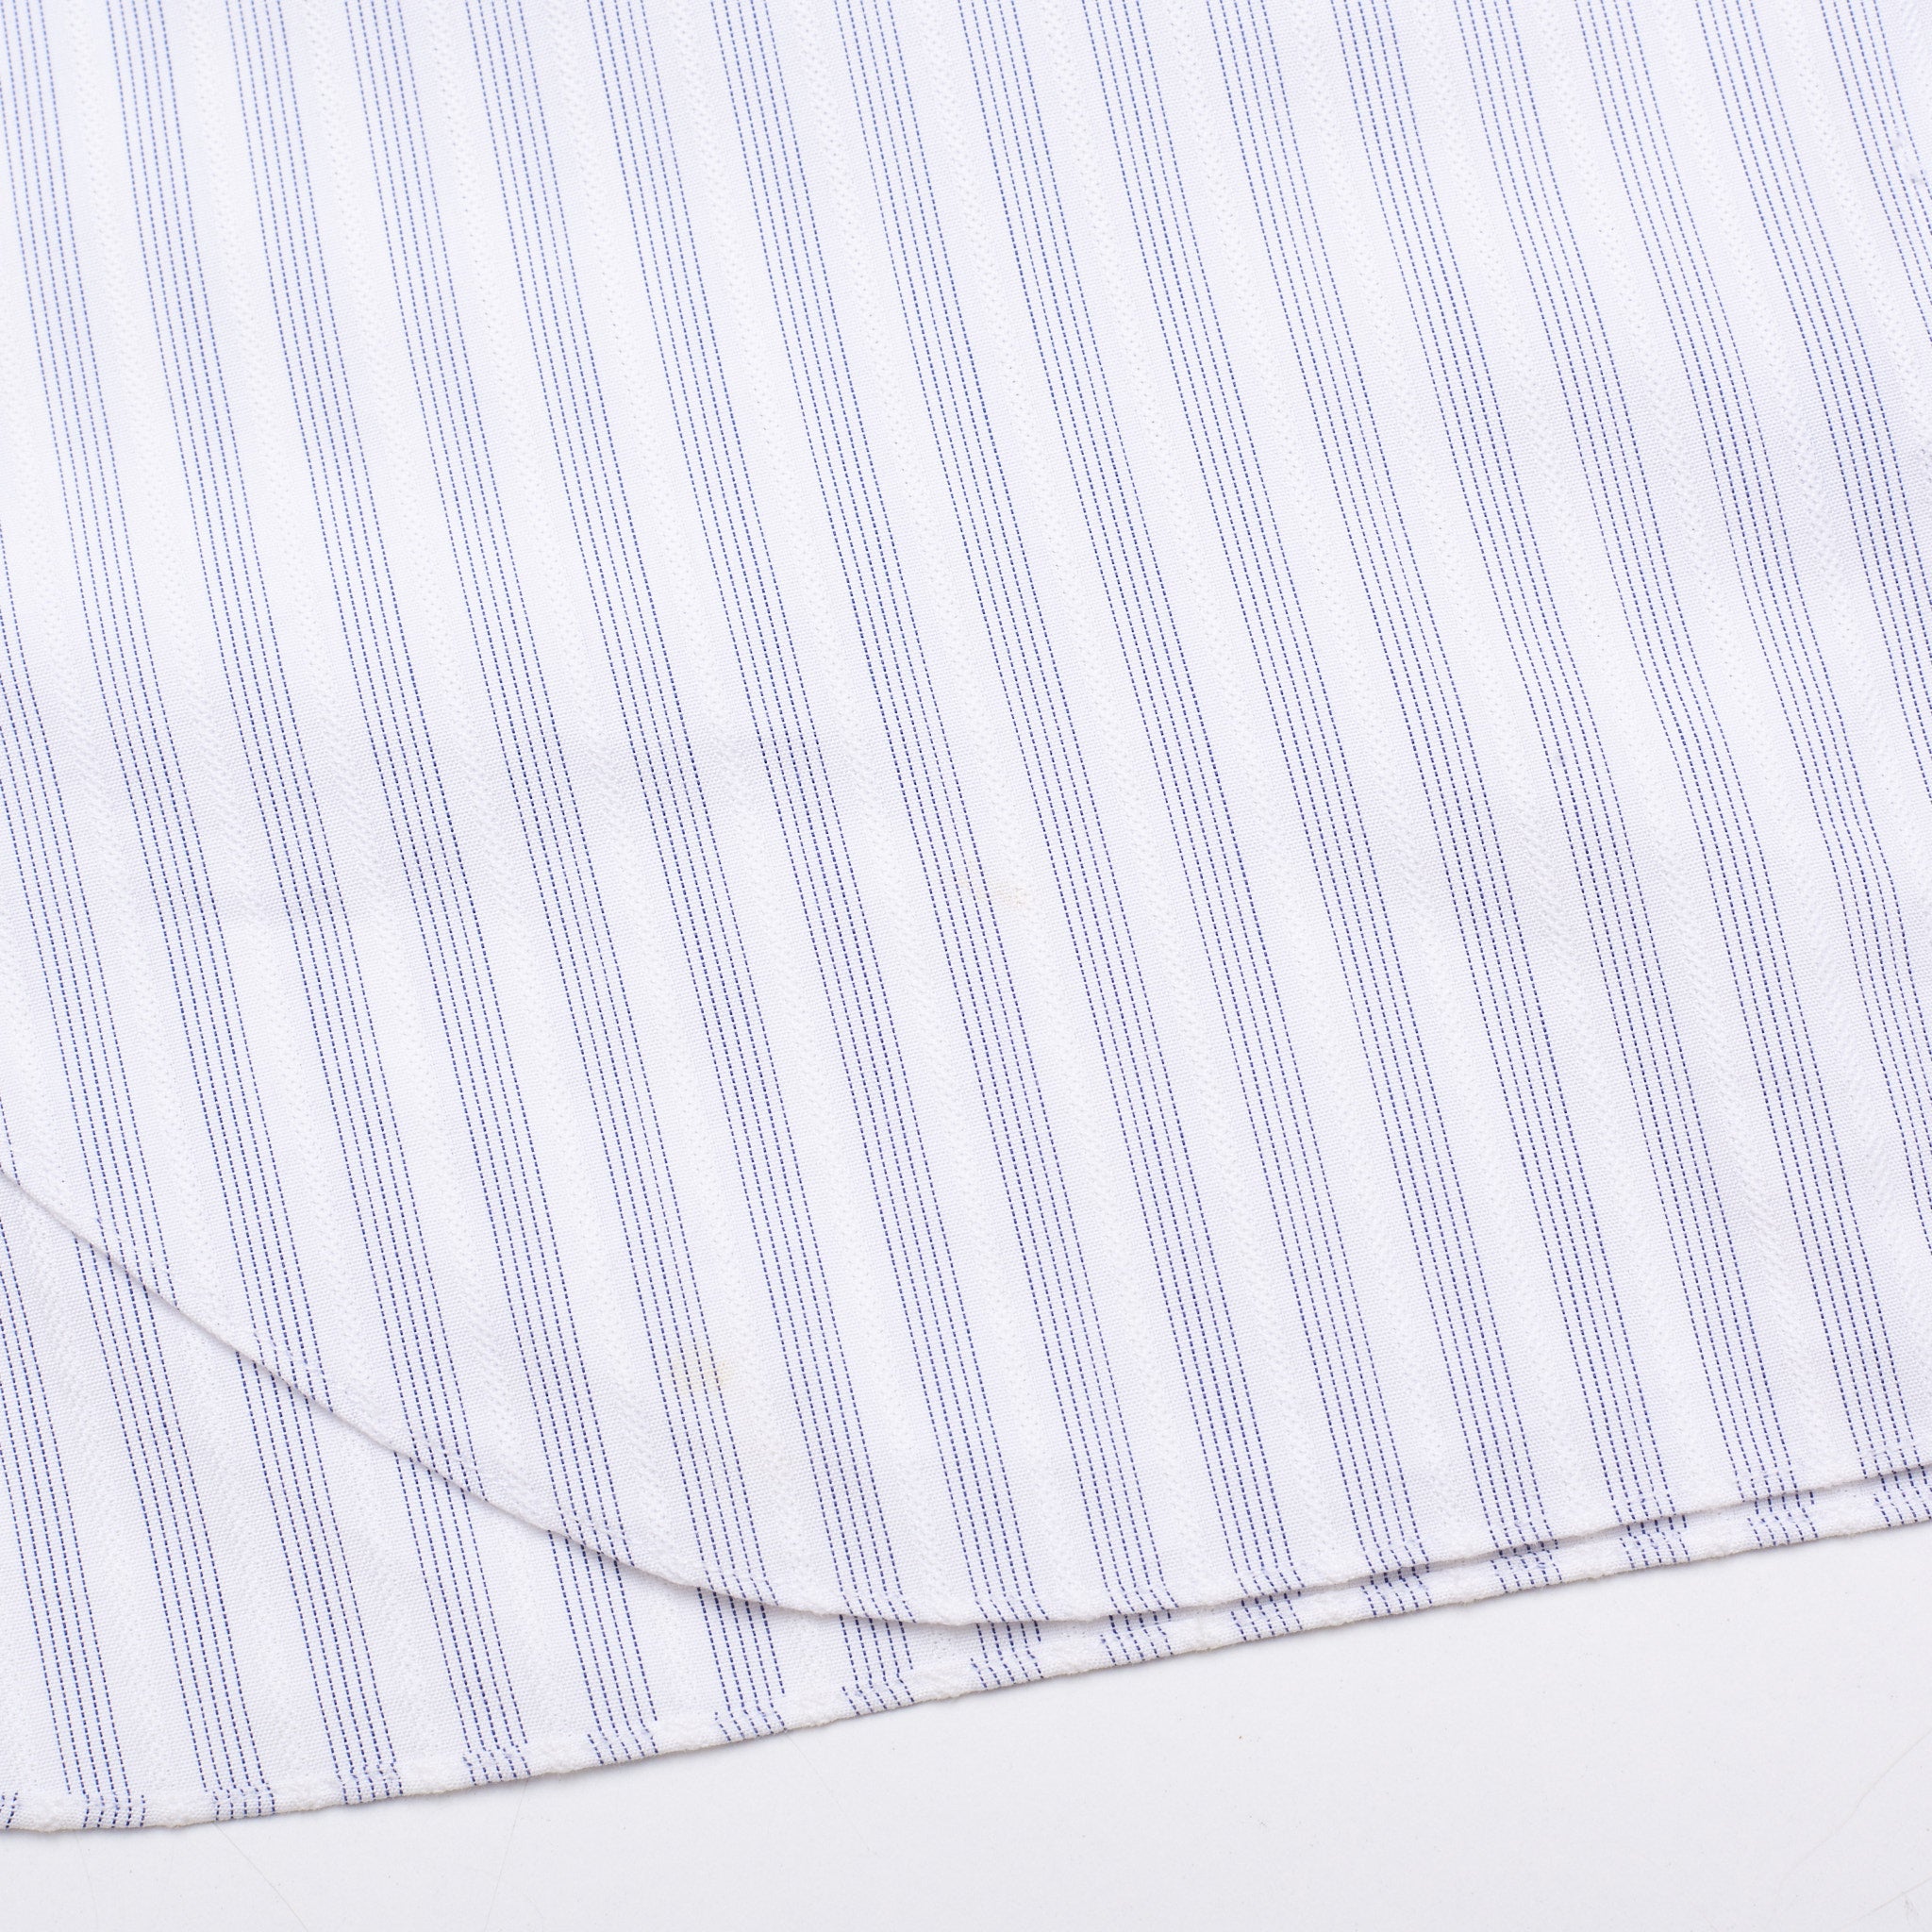 BARBA Handmade White Striped Cotton Button-Down Dress Shirt EU 40 US 15.75 BARBA